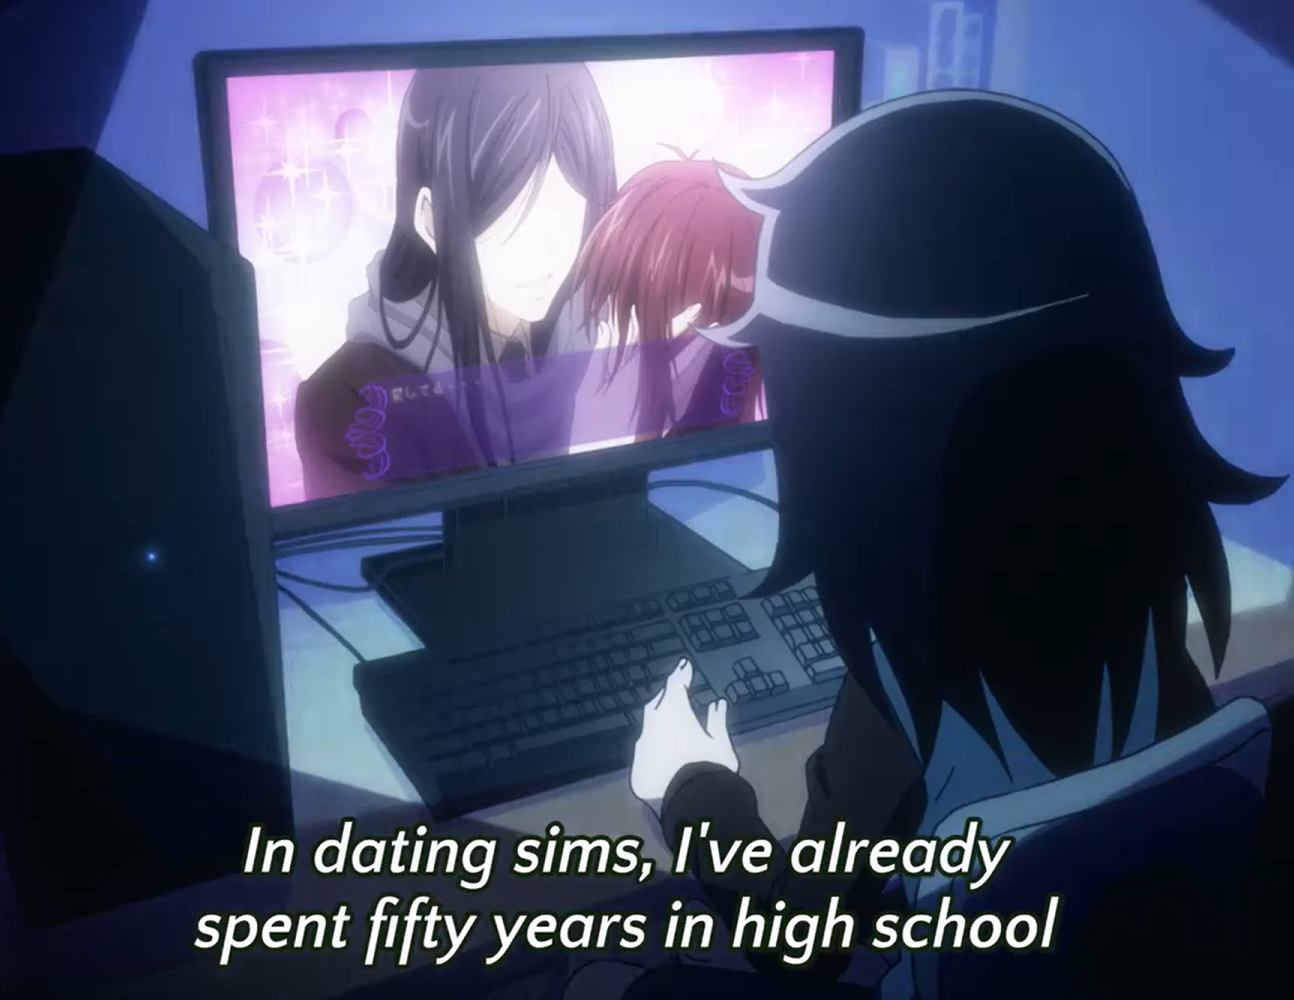 No wonder anime piracy has gone up : r/Animemes